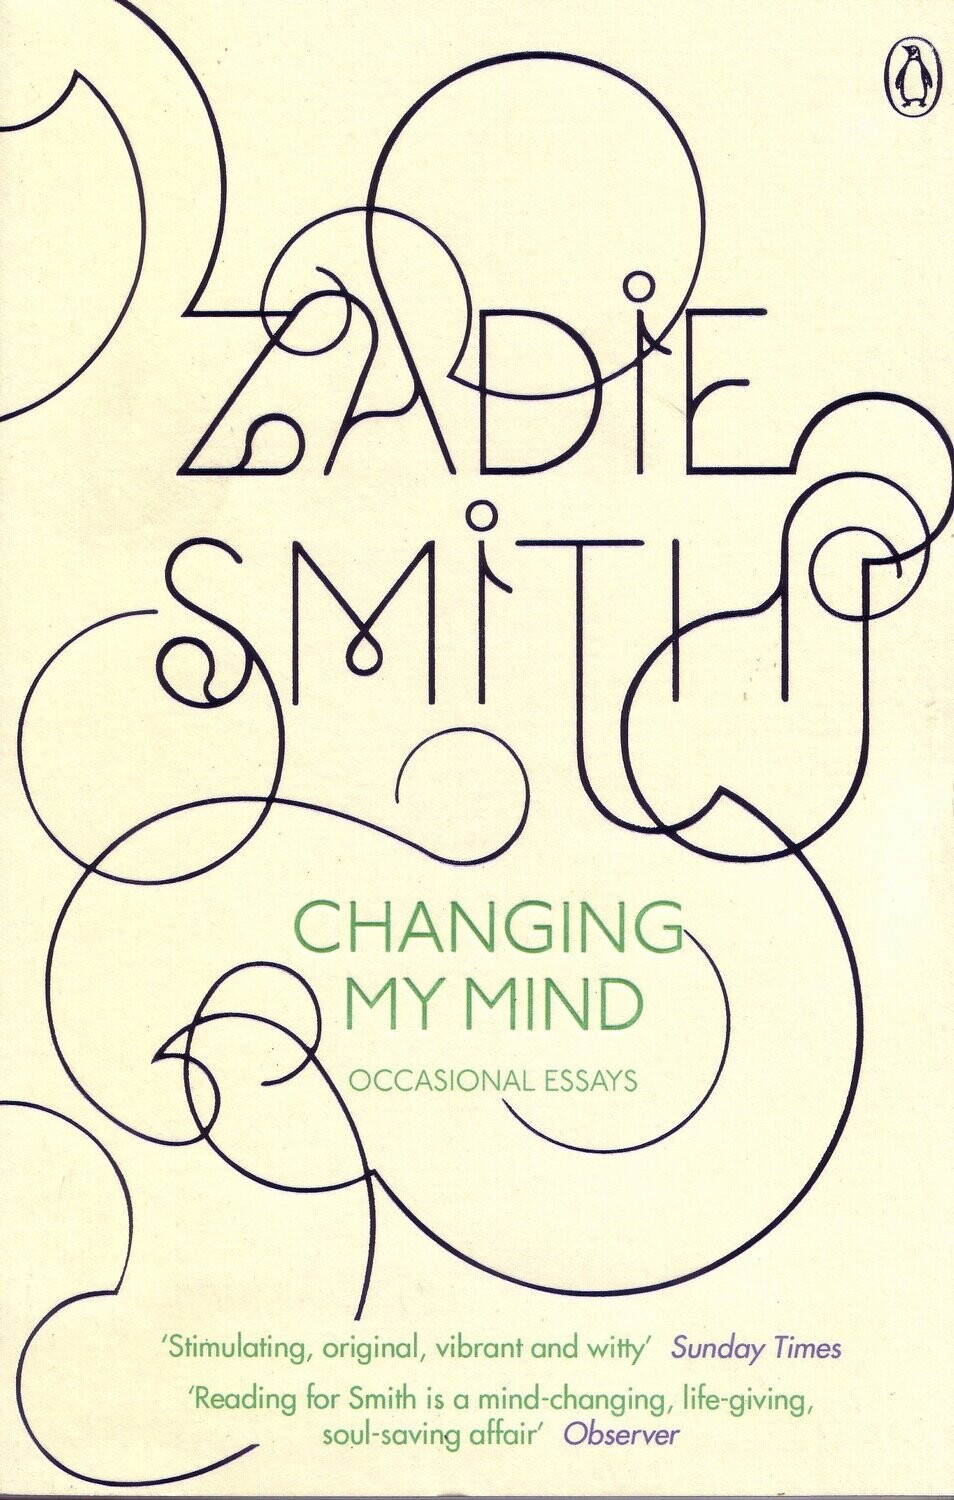 That Crafty Feeling by Zadie Smith